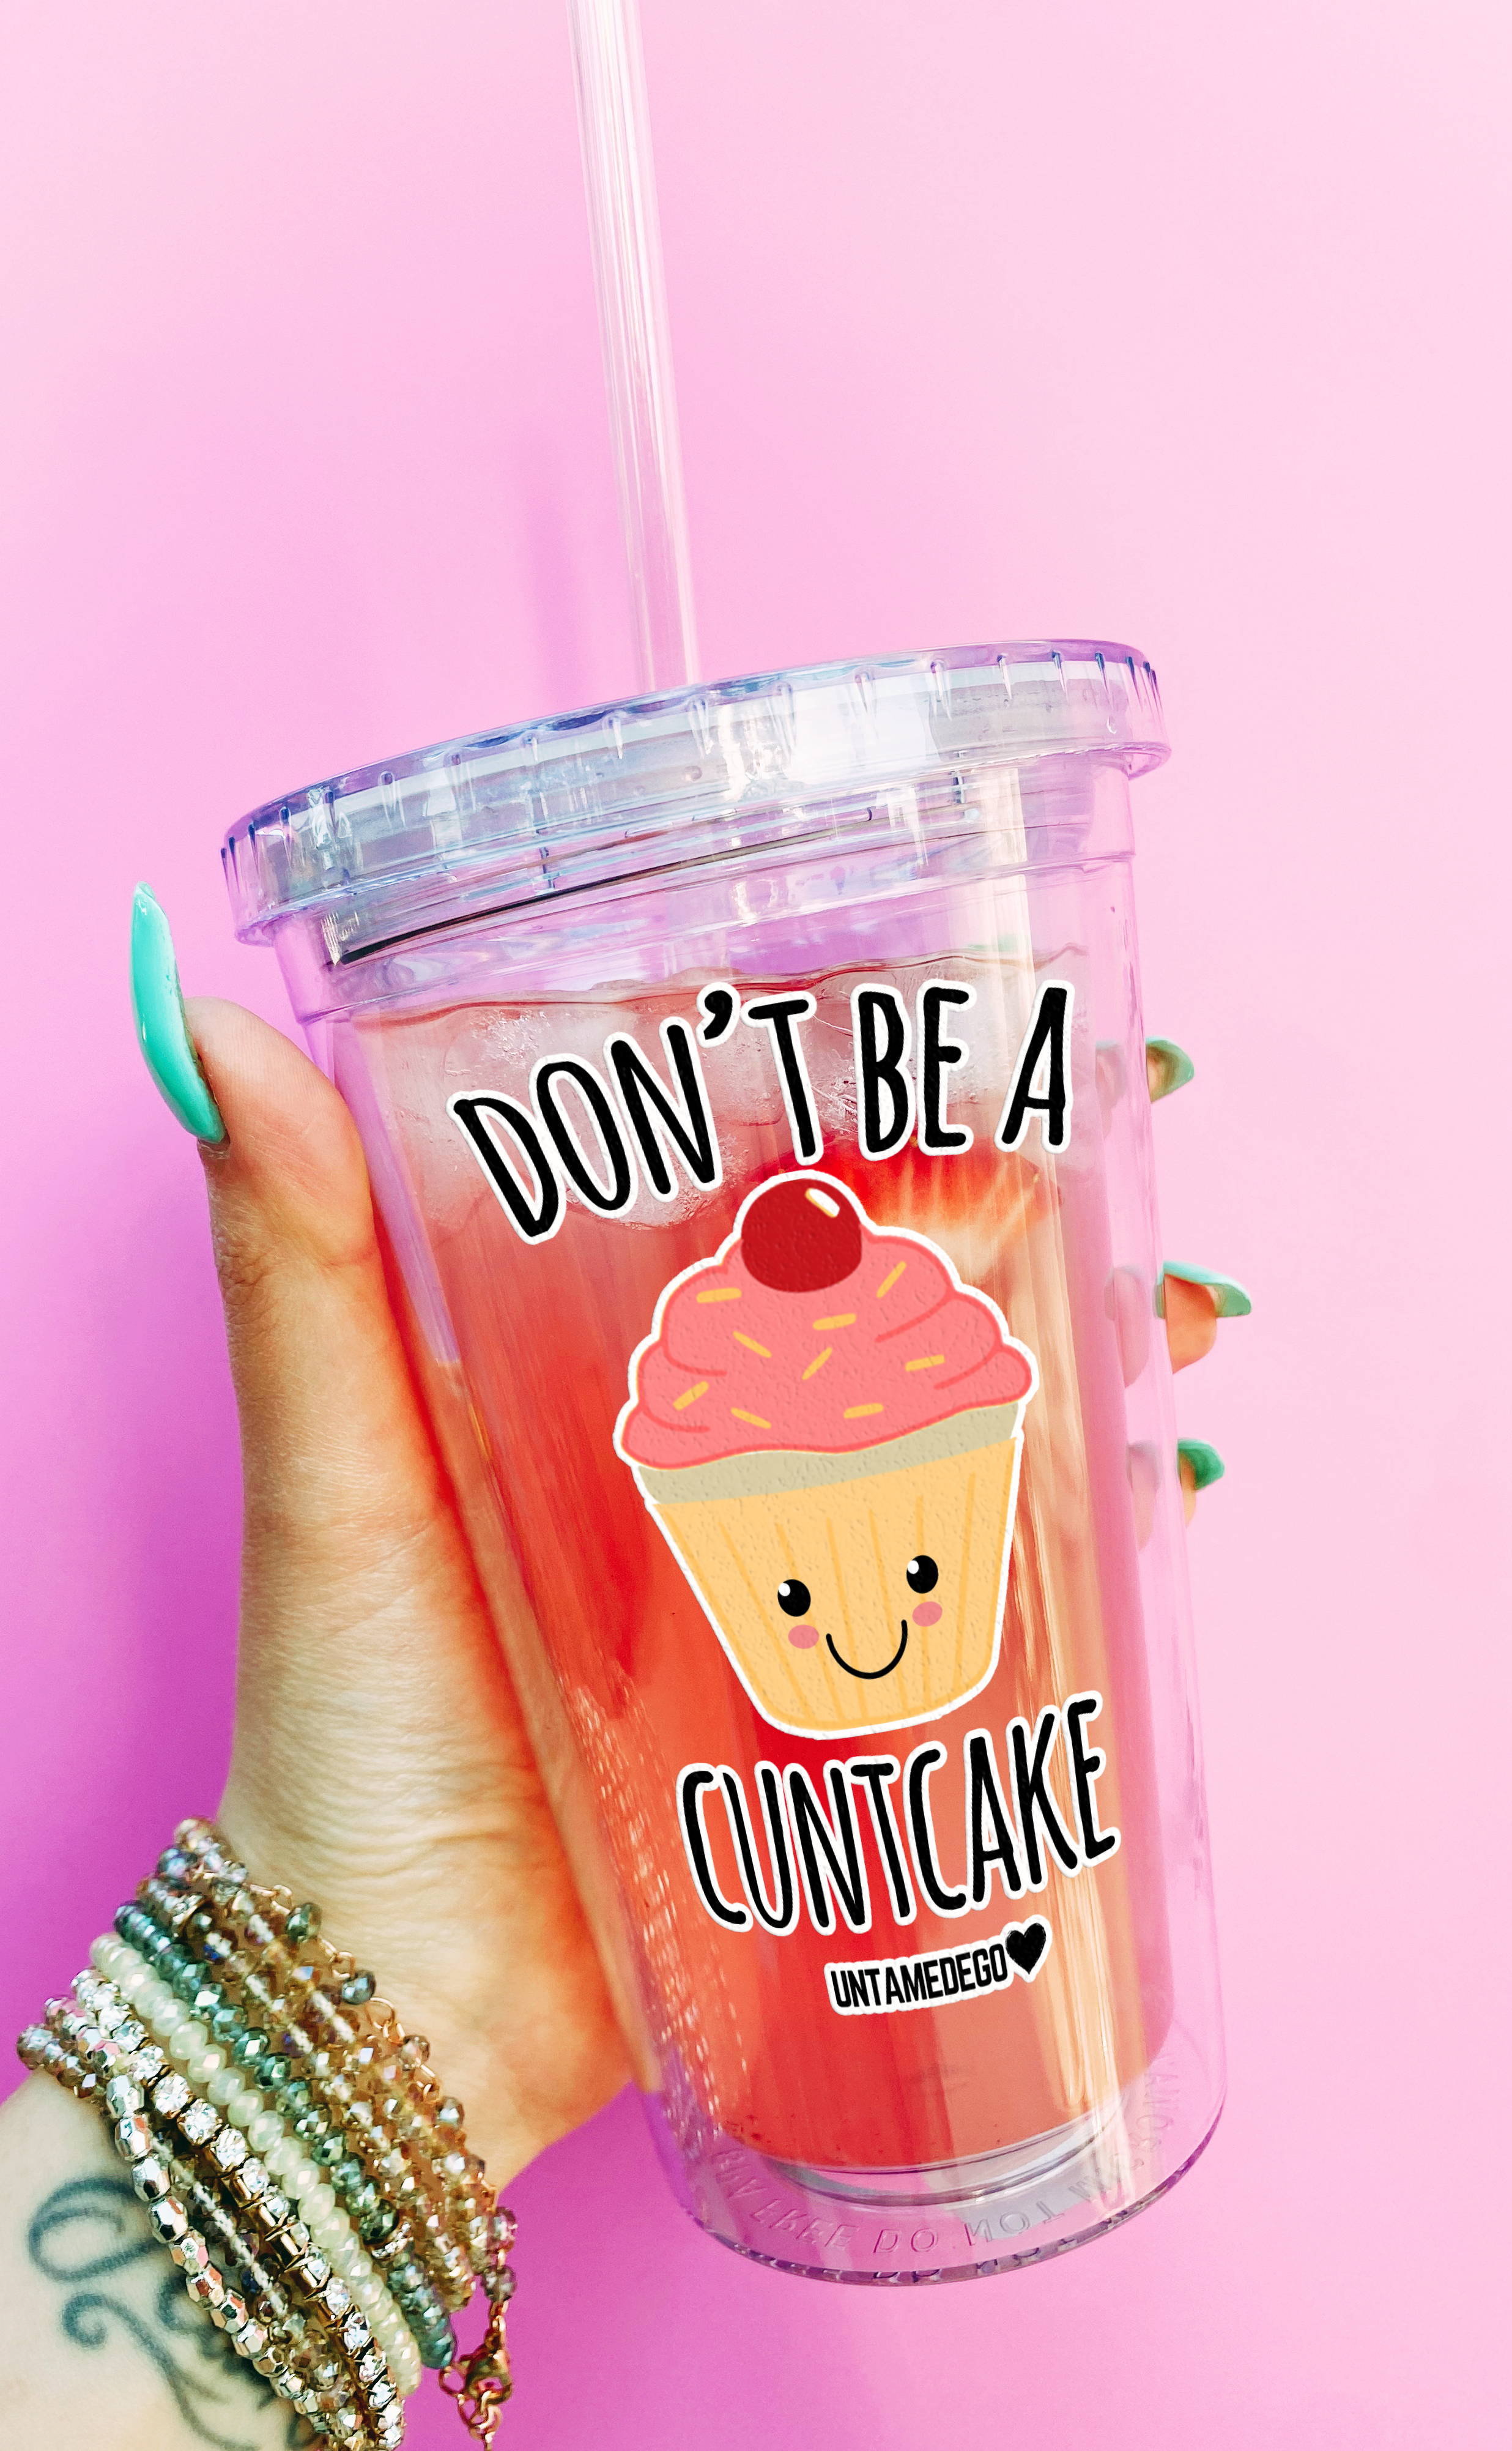 Don't Be A Cuntcake Cold Drink Cup - UntamedEgo LLC.